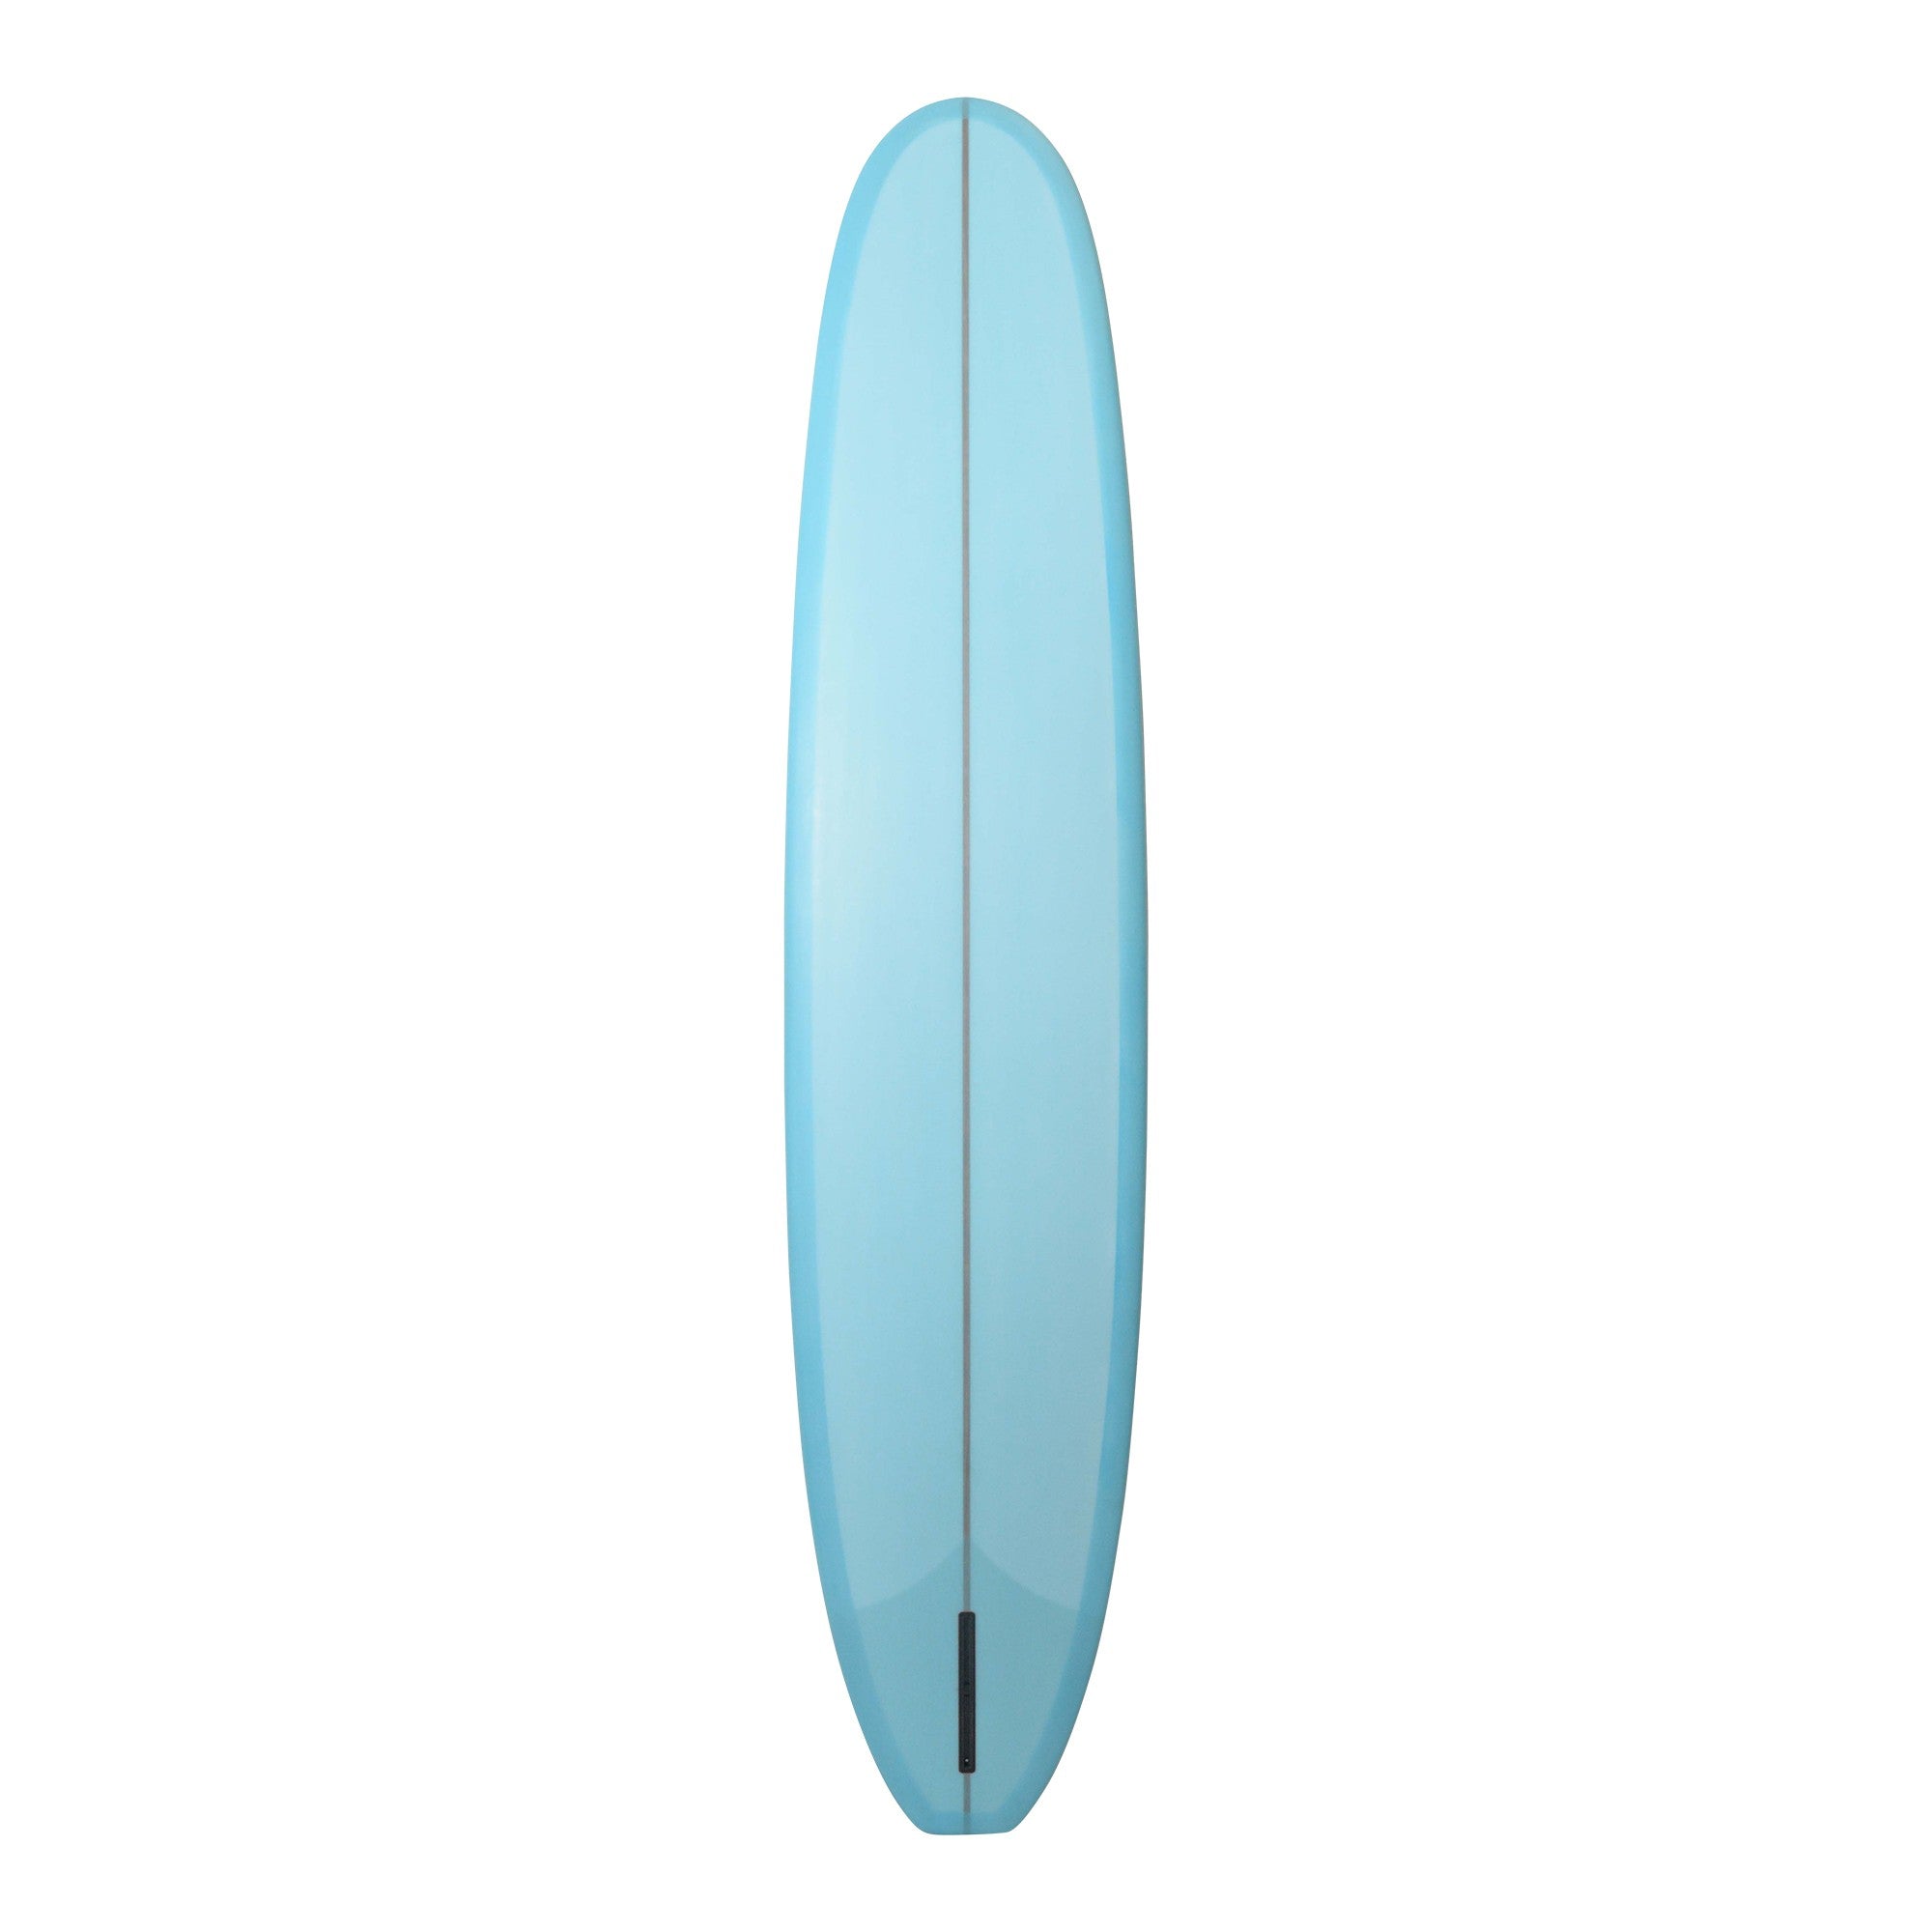 ELMORE SURFBOARDS - Sam's Club Longboard - 9'4 (PU) - Blue